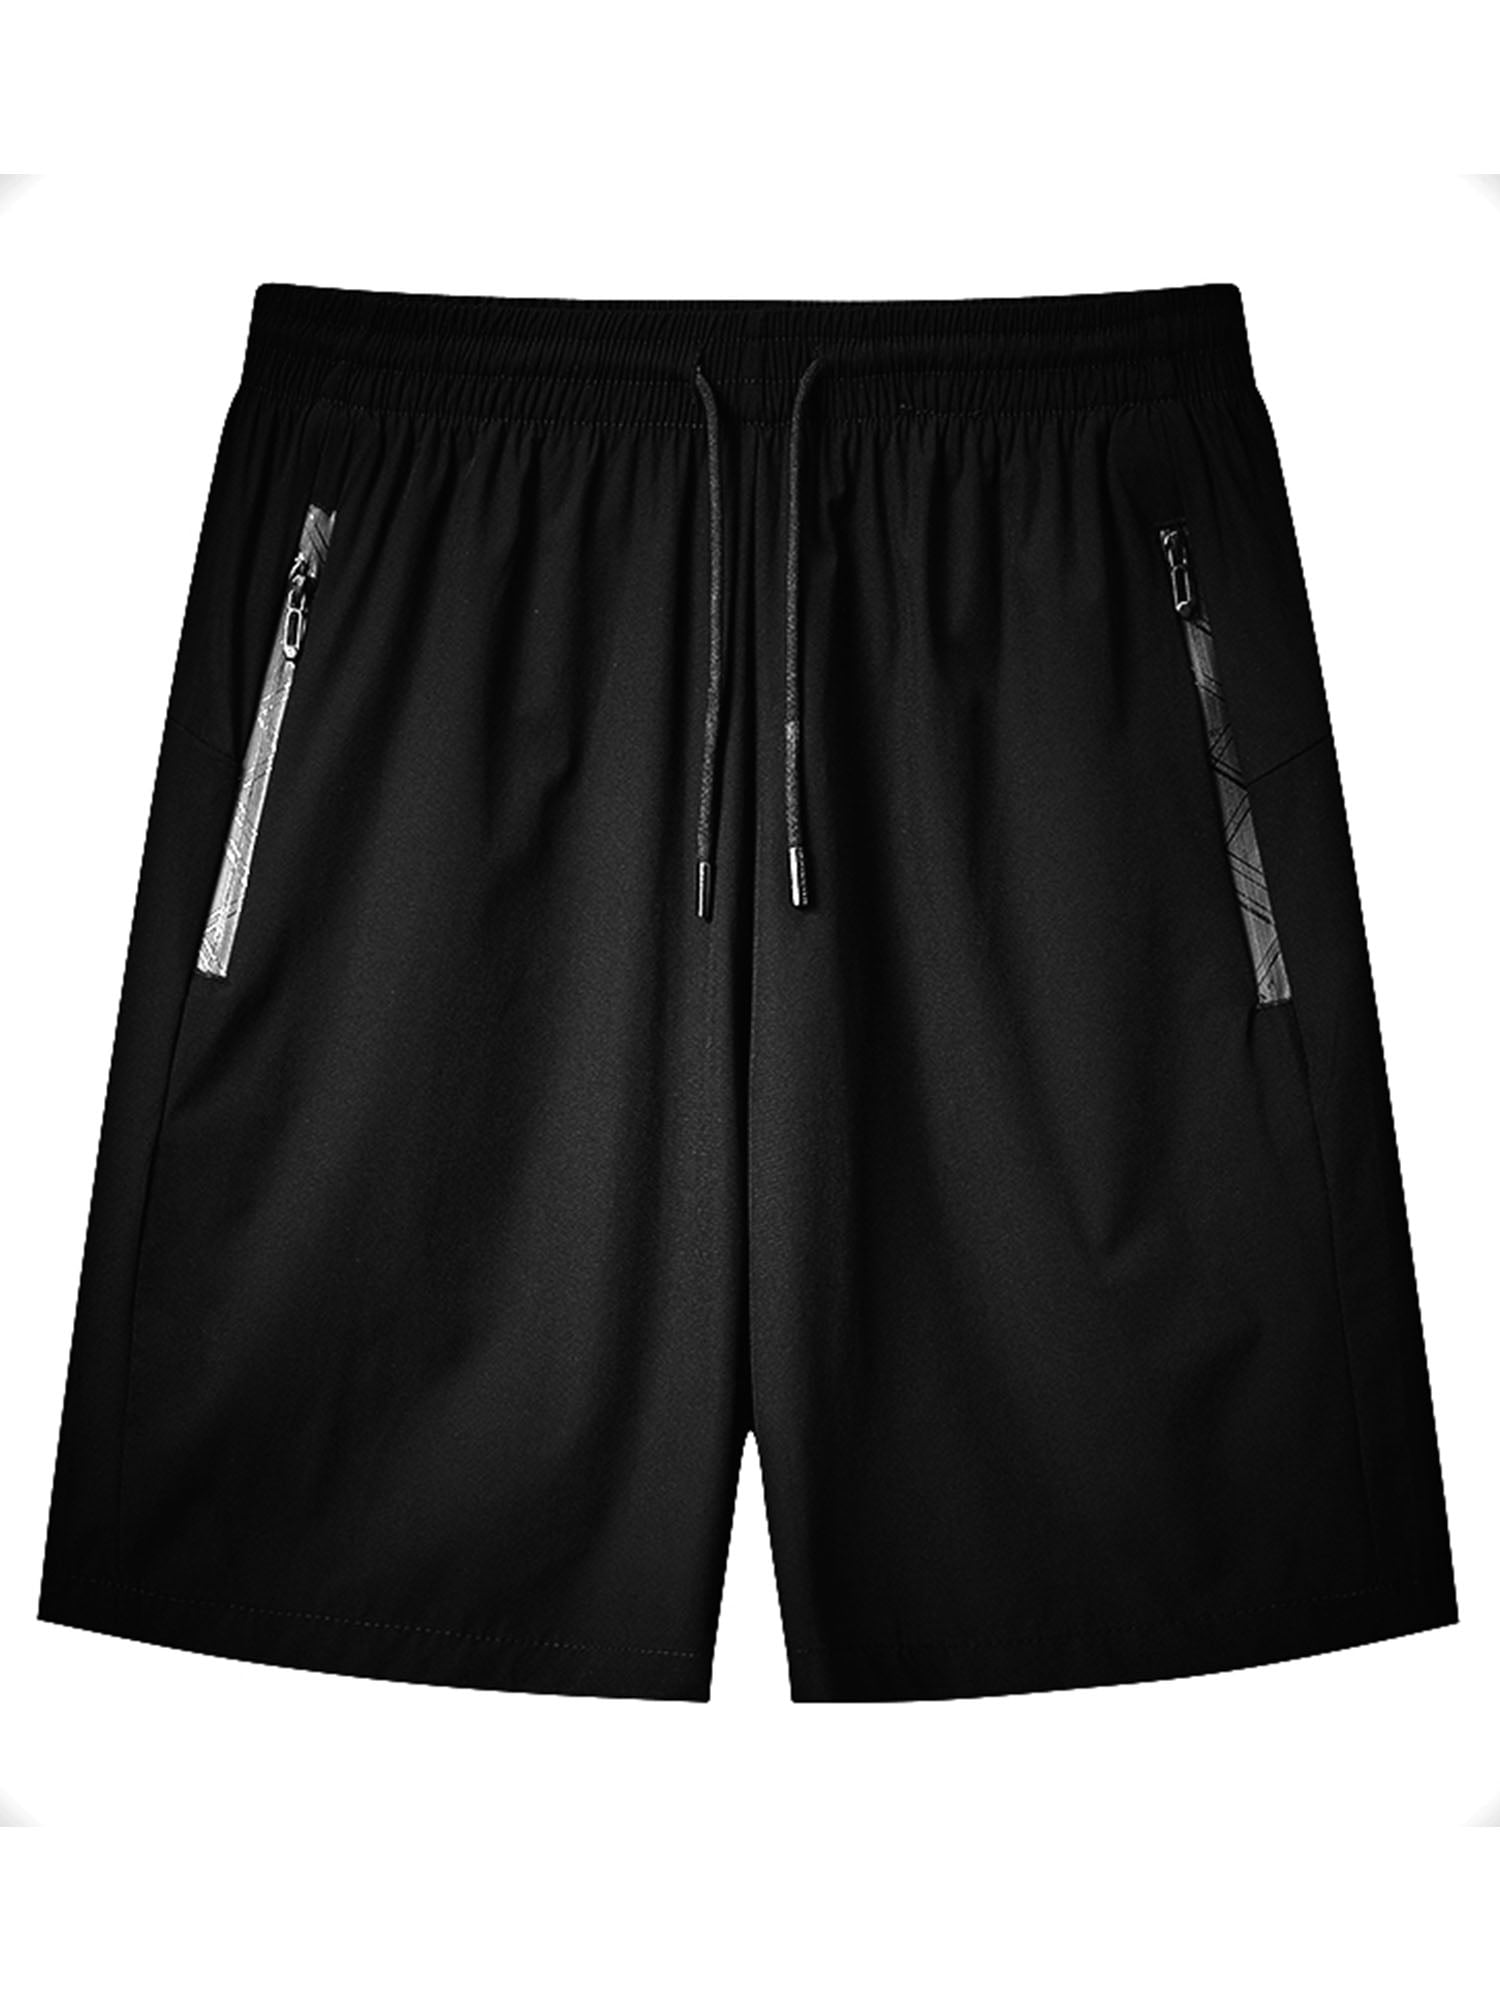 Hajotrawa Mens Sport Lounge Quick Dry Beach Board Shorts Elastic Waist Shorts